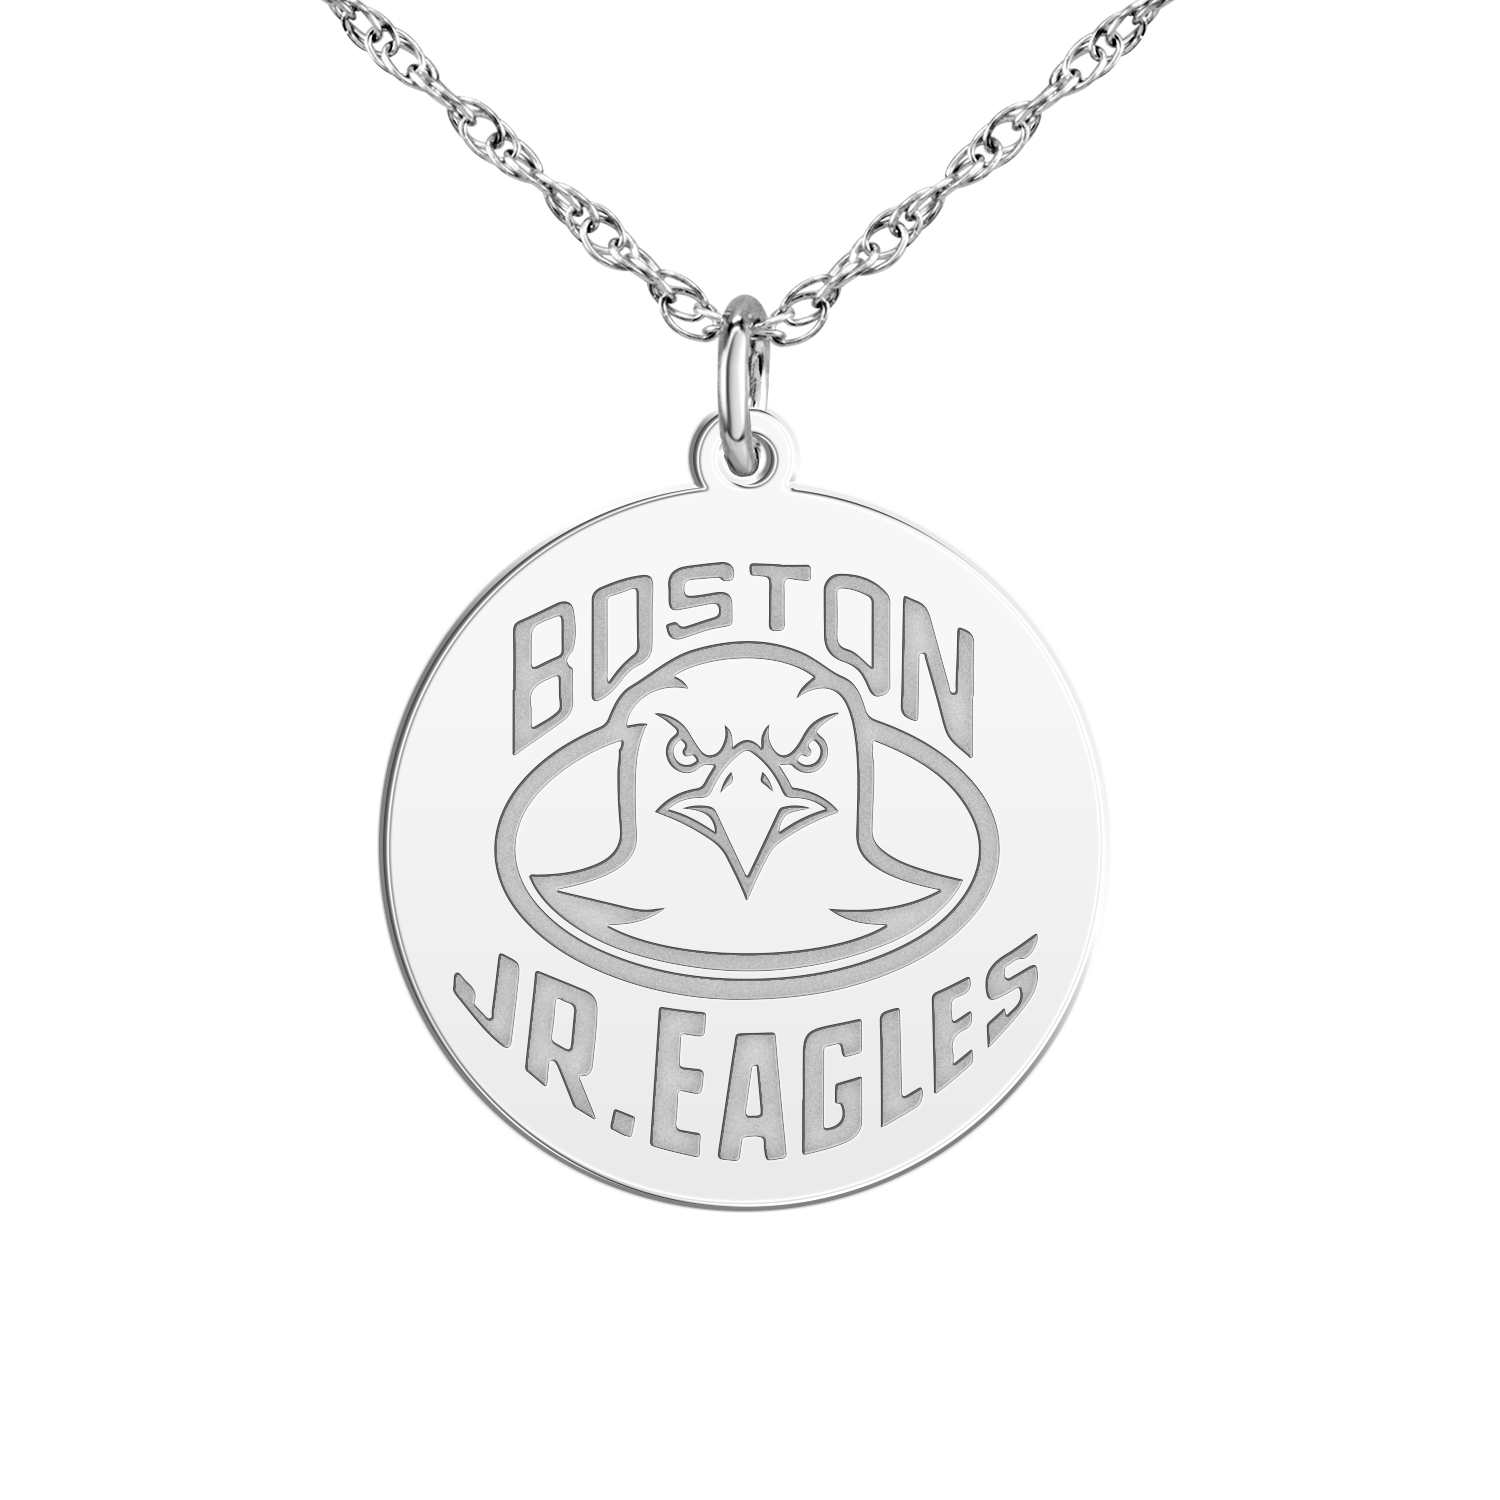 Boston Jr Eagles Logo Disc Small